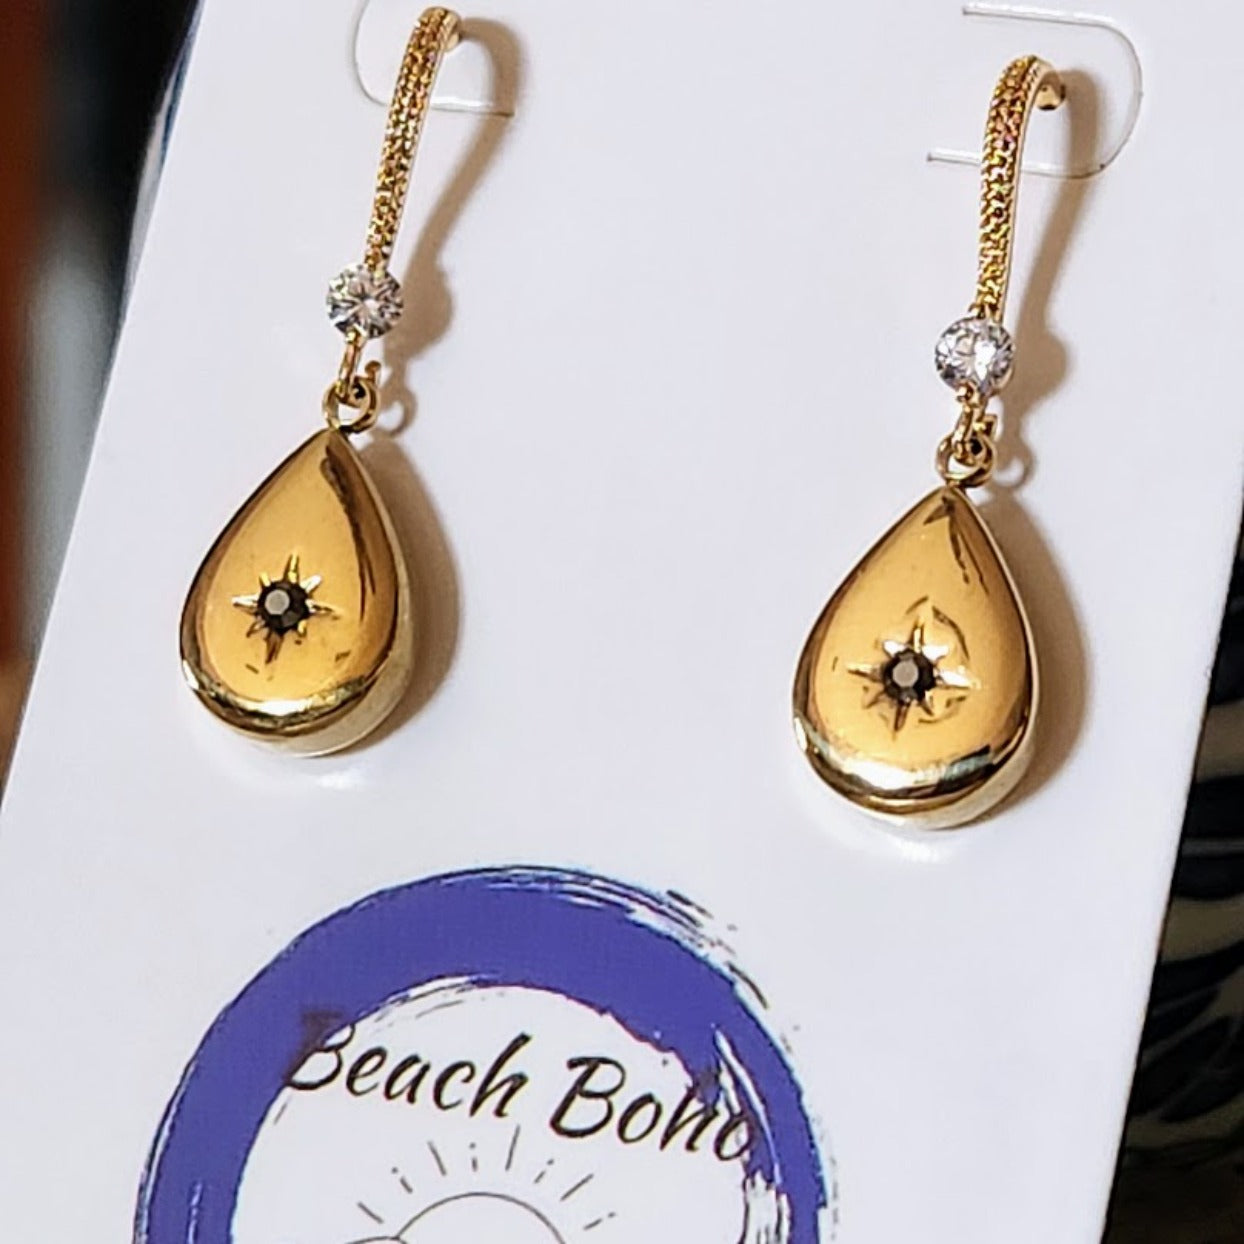 STAR DROP - 925 GOLD FILLED DROP EARRINGS - Premium earrings from www.beachboho.com.au - Just $45! Shop now at www.beachboho.com.au